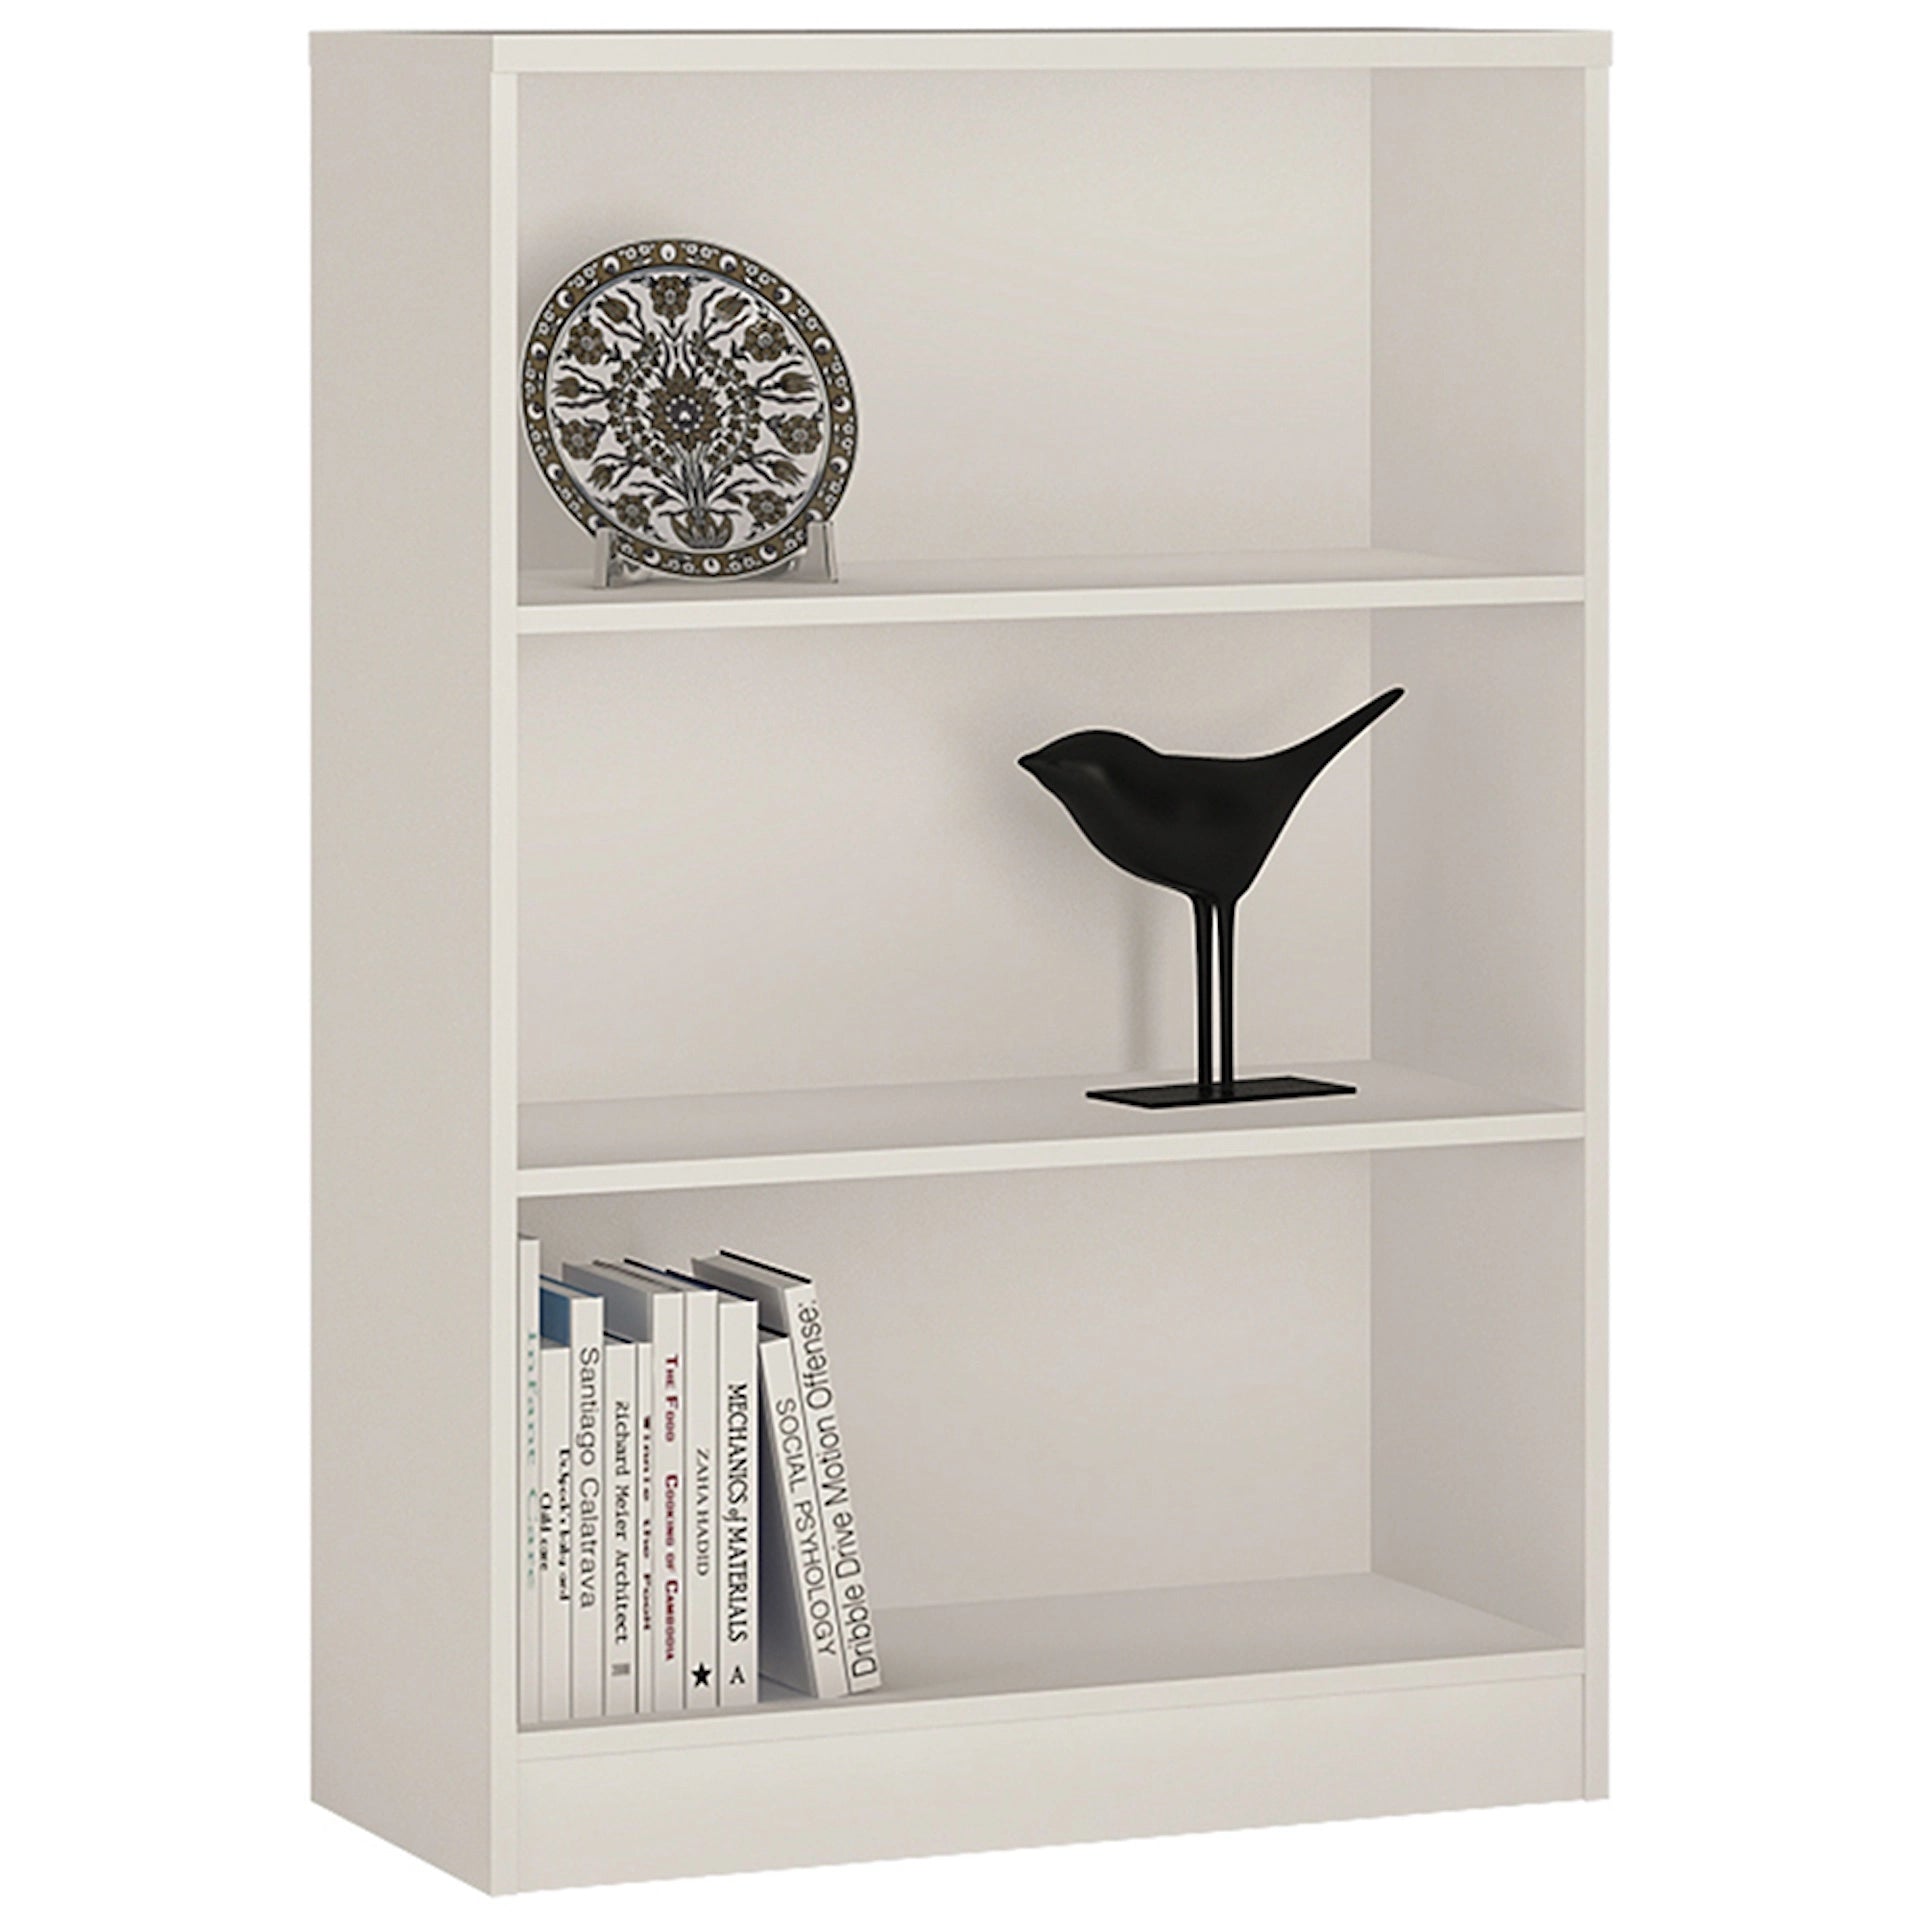 Furniture To Go 4 You Medium Wide Bookcase in Pearl White